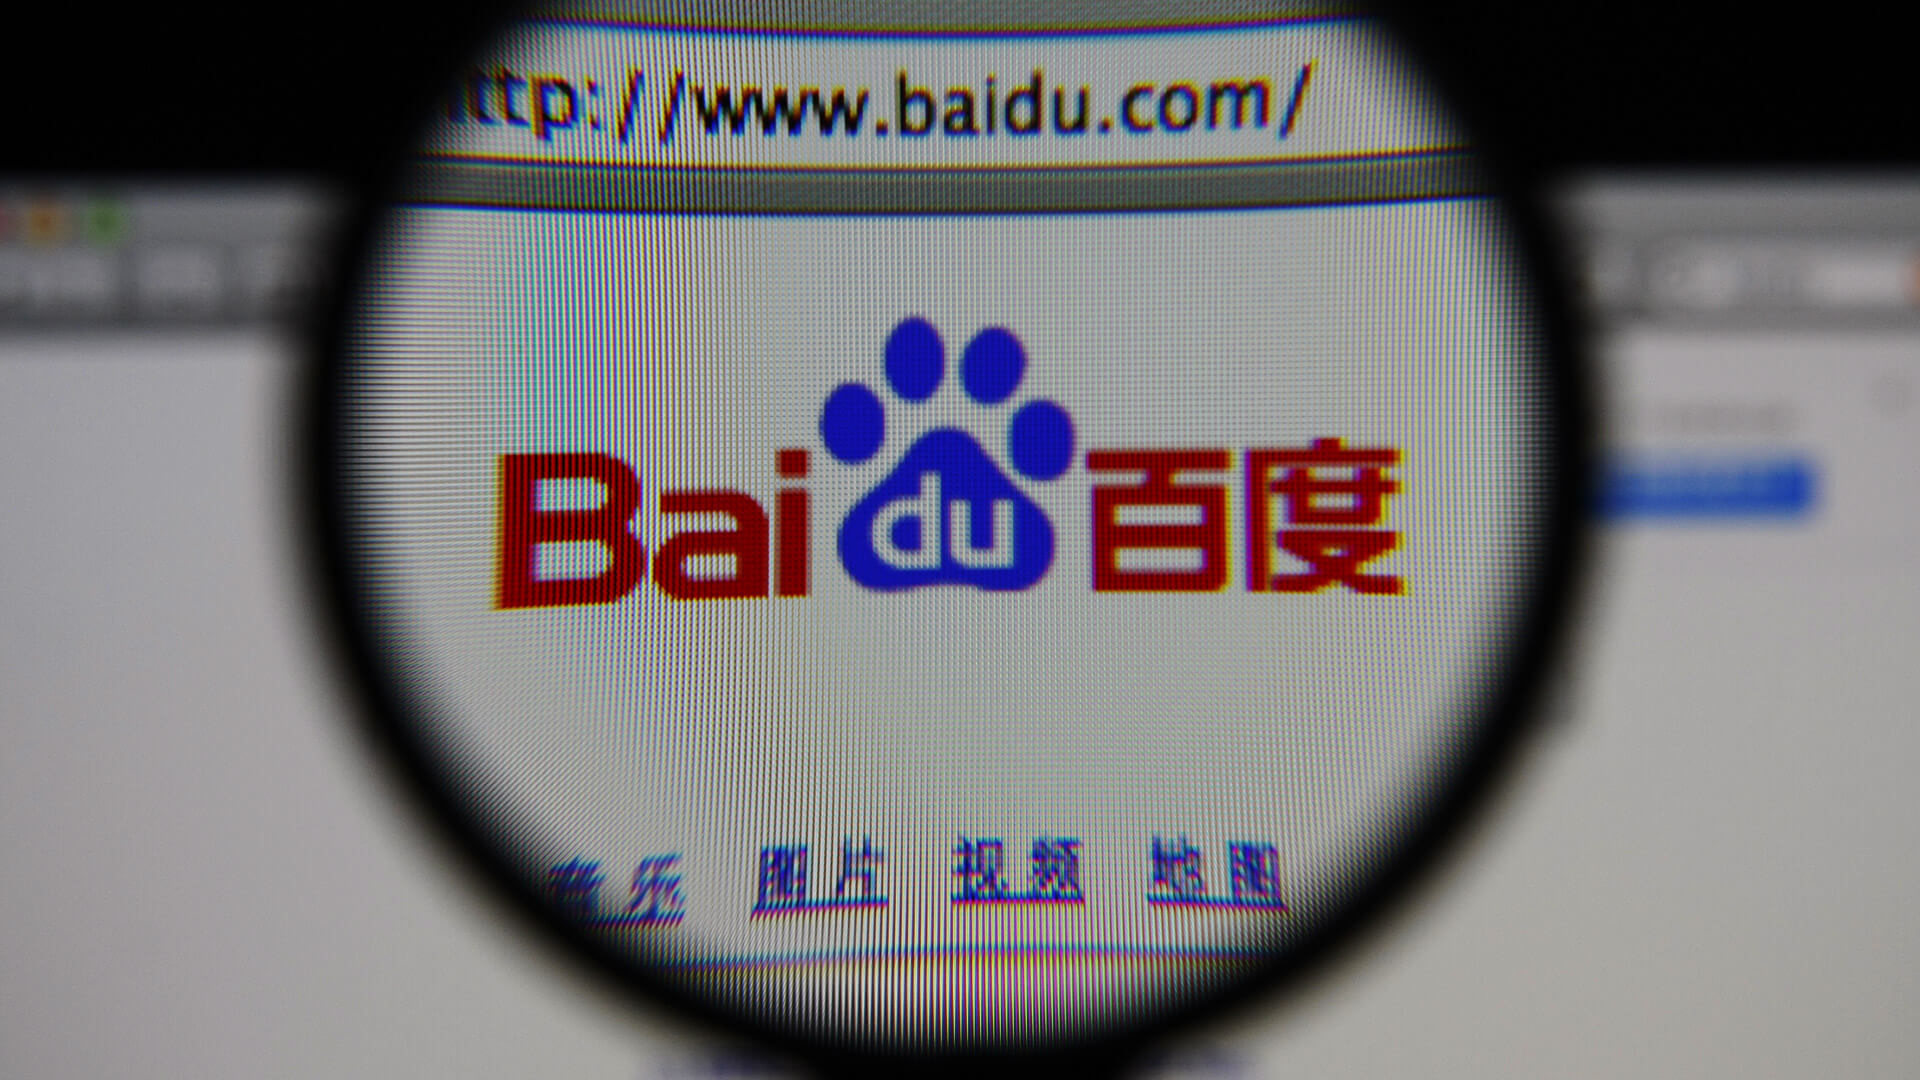 Baidu Wallpapers